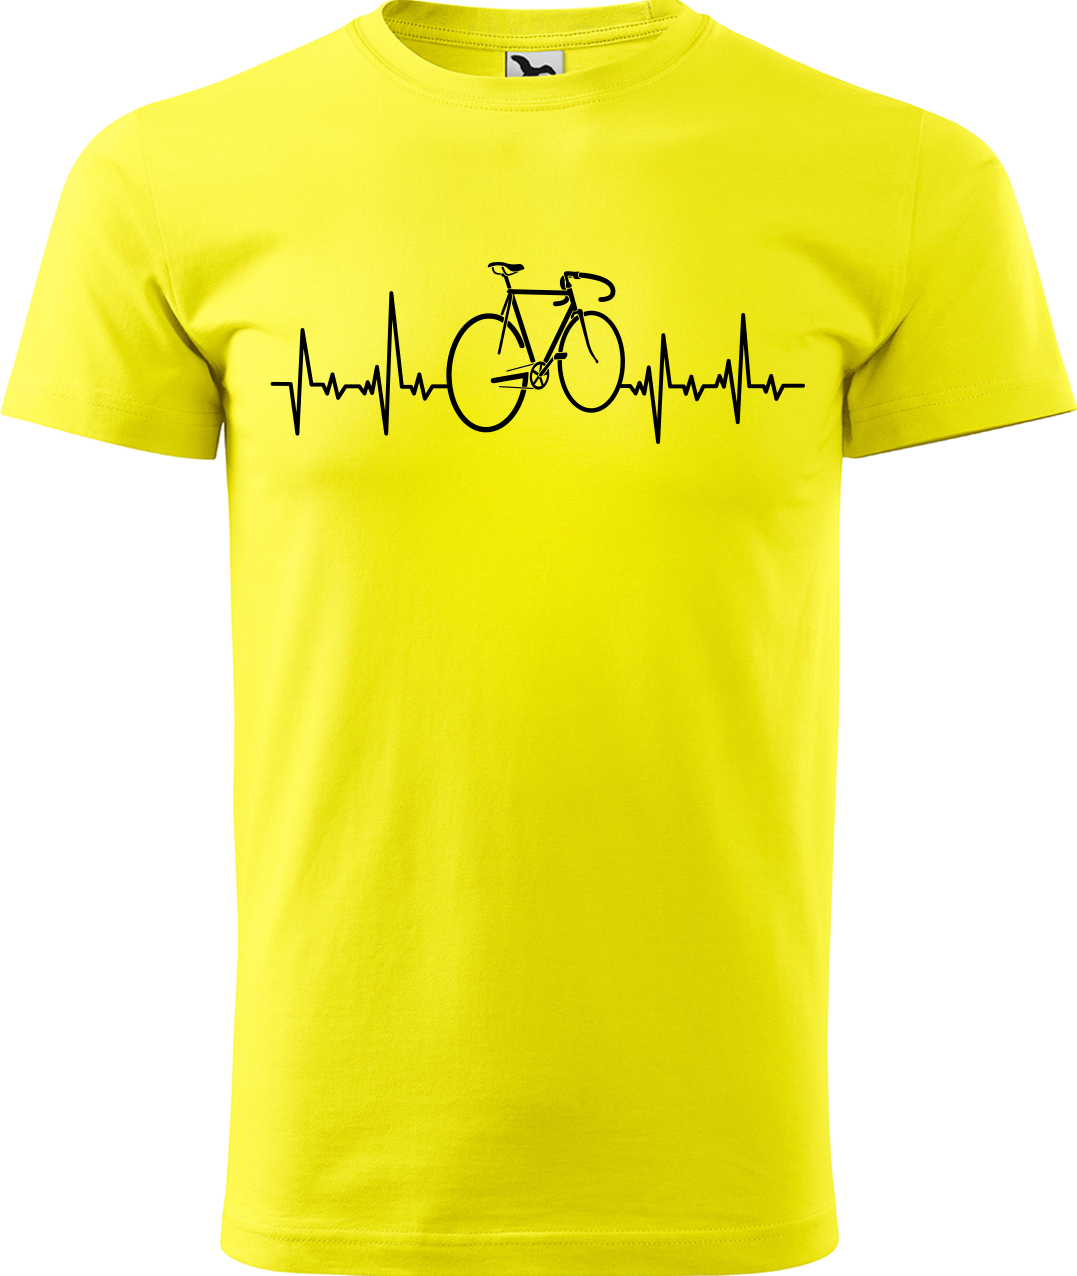 Pánské tričko s kolem - Cyklistův kardiogram Velikost: S, Barva: Žlutá (04)